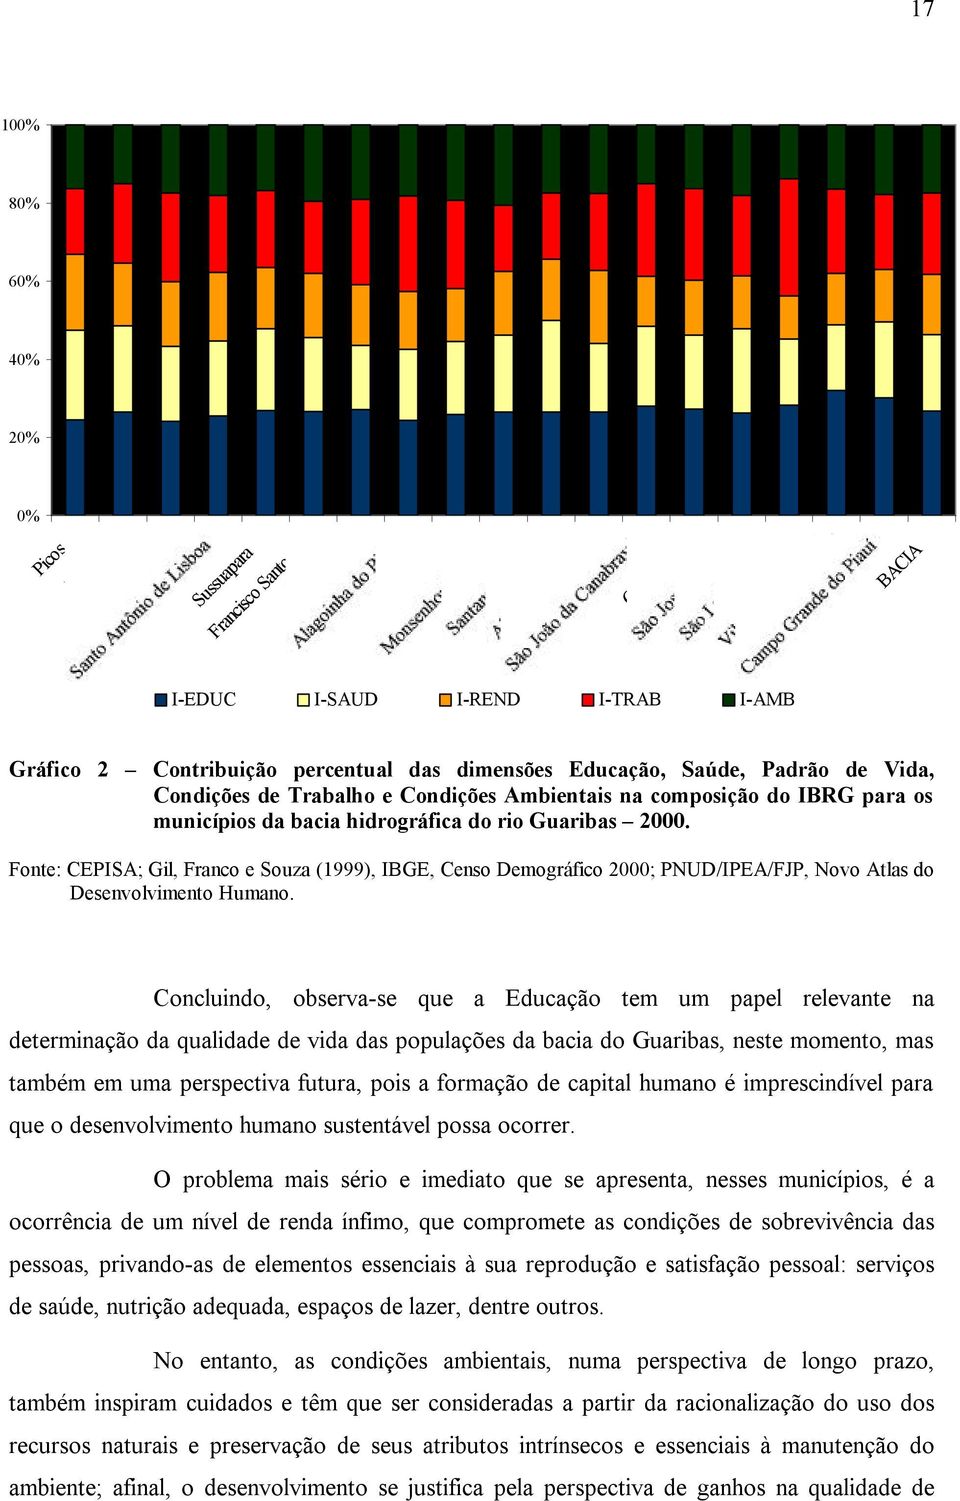 Fonte: CEPISA; Gil, Franco e Souza (1999), IBGE, Censo Demográfico 2000; PNUD/IPEA/FJP, Novo Atlas do Desenvolvimento Humano.